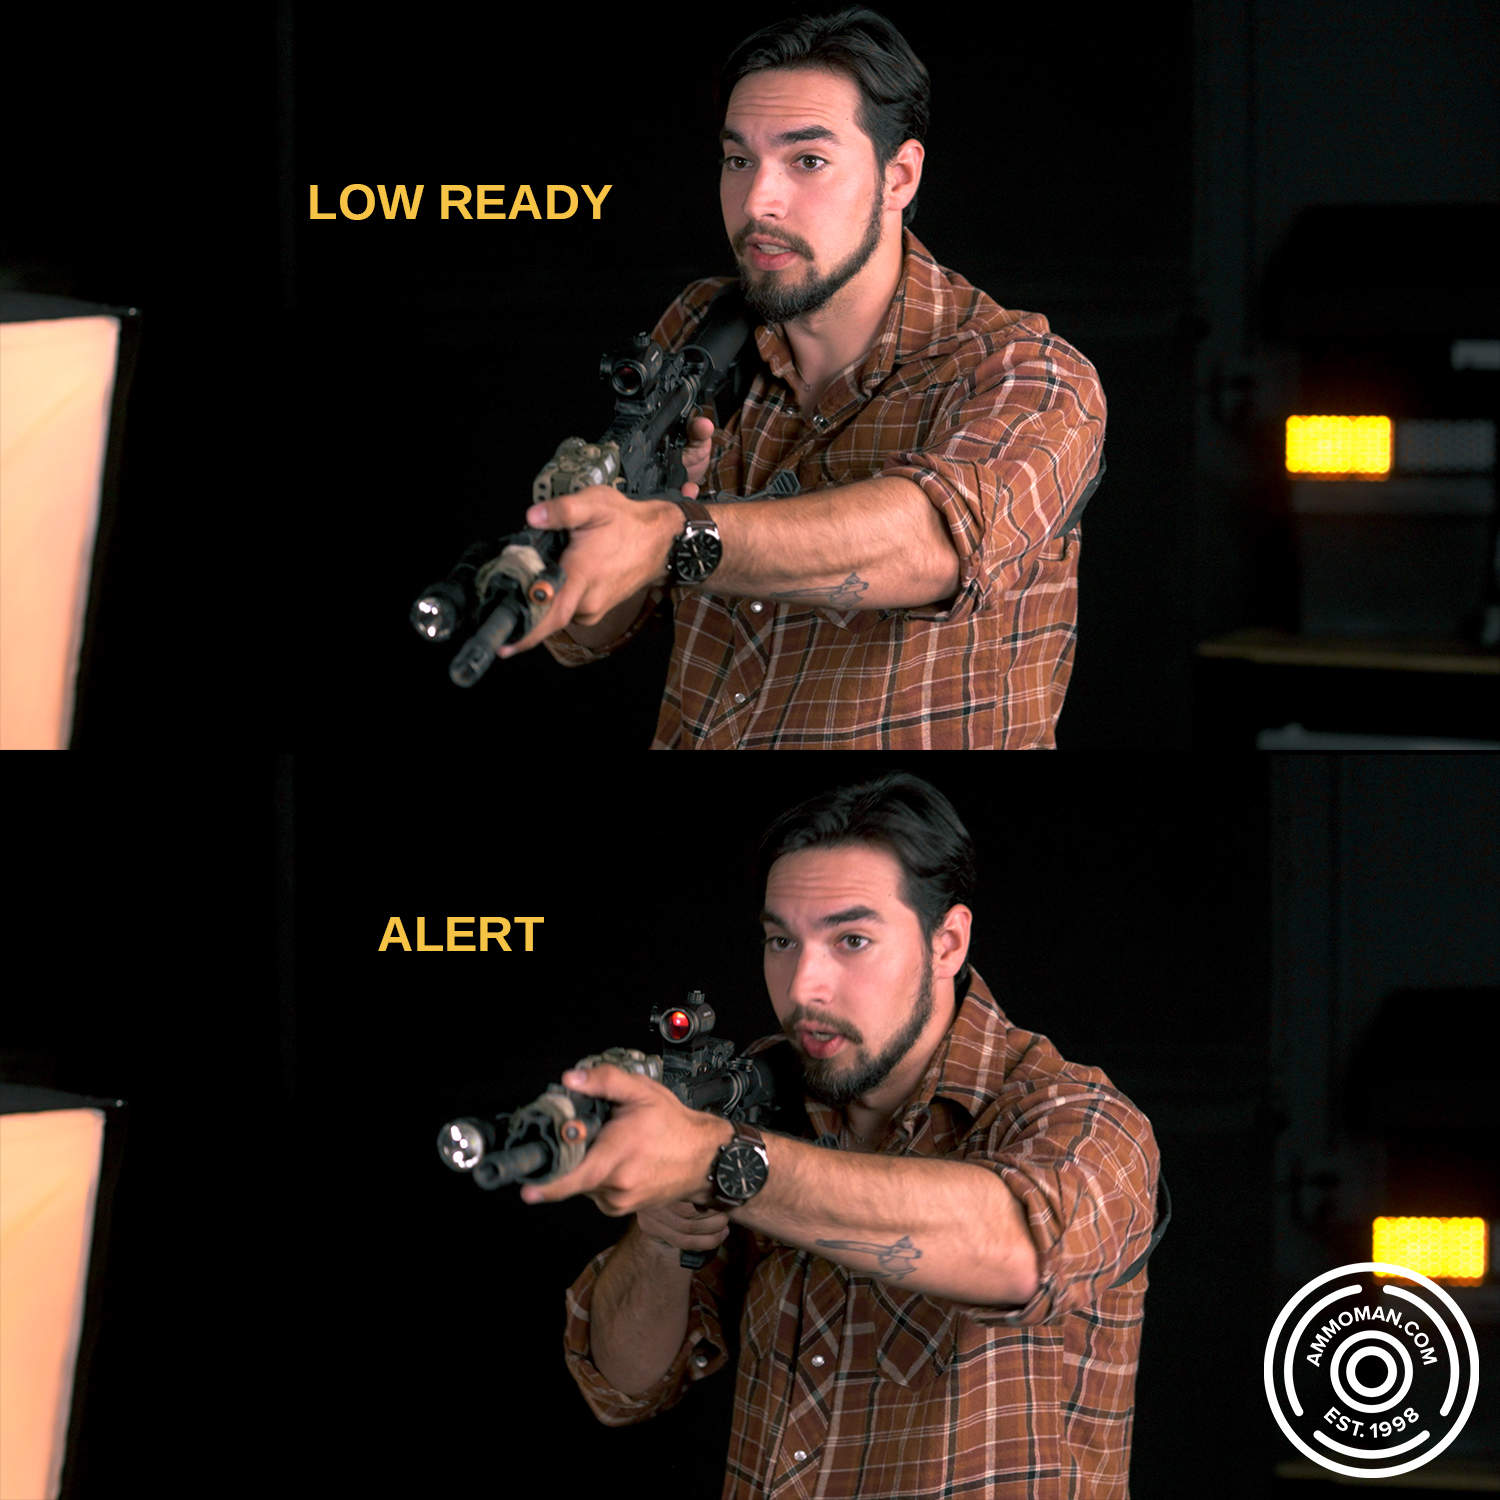 Low ready vs. an alert position